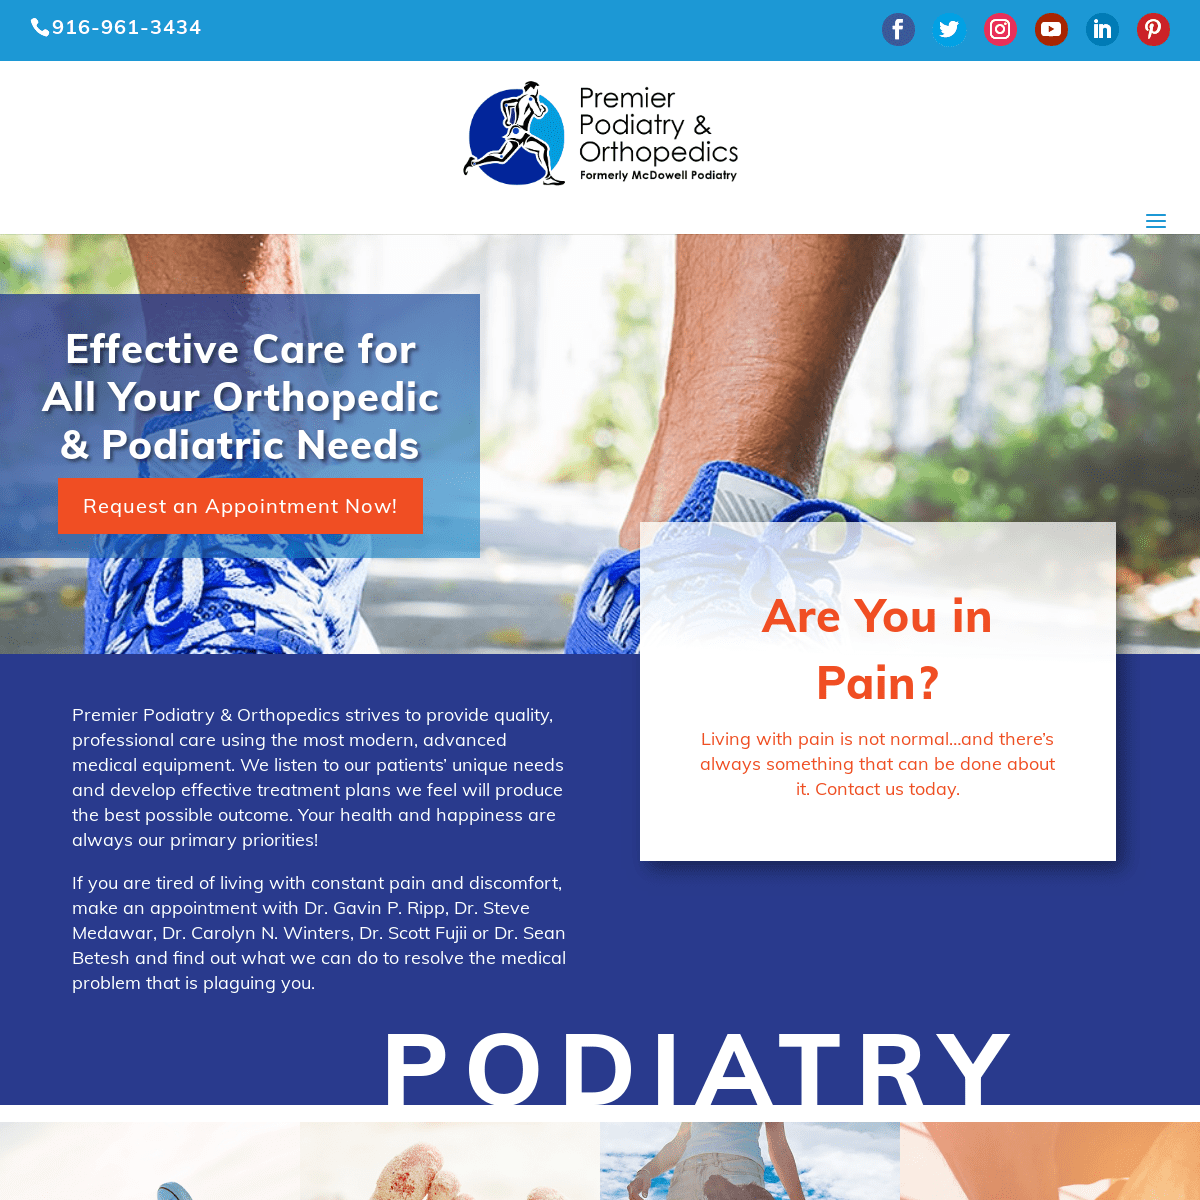 #1 Rated Podiatry & Orthopedics Office - Premier Podiatry & Orthopedics ...